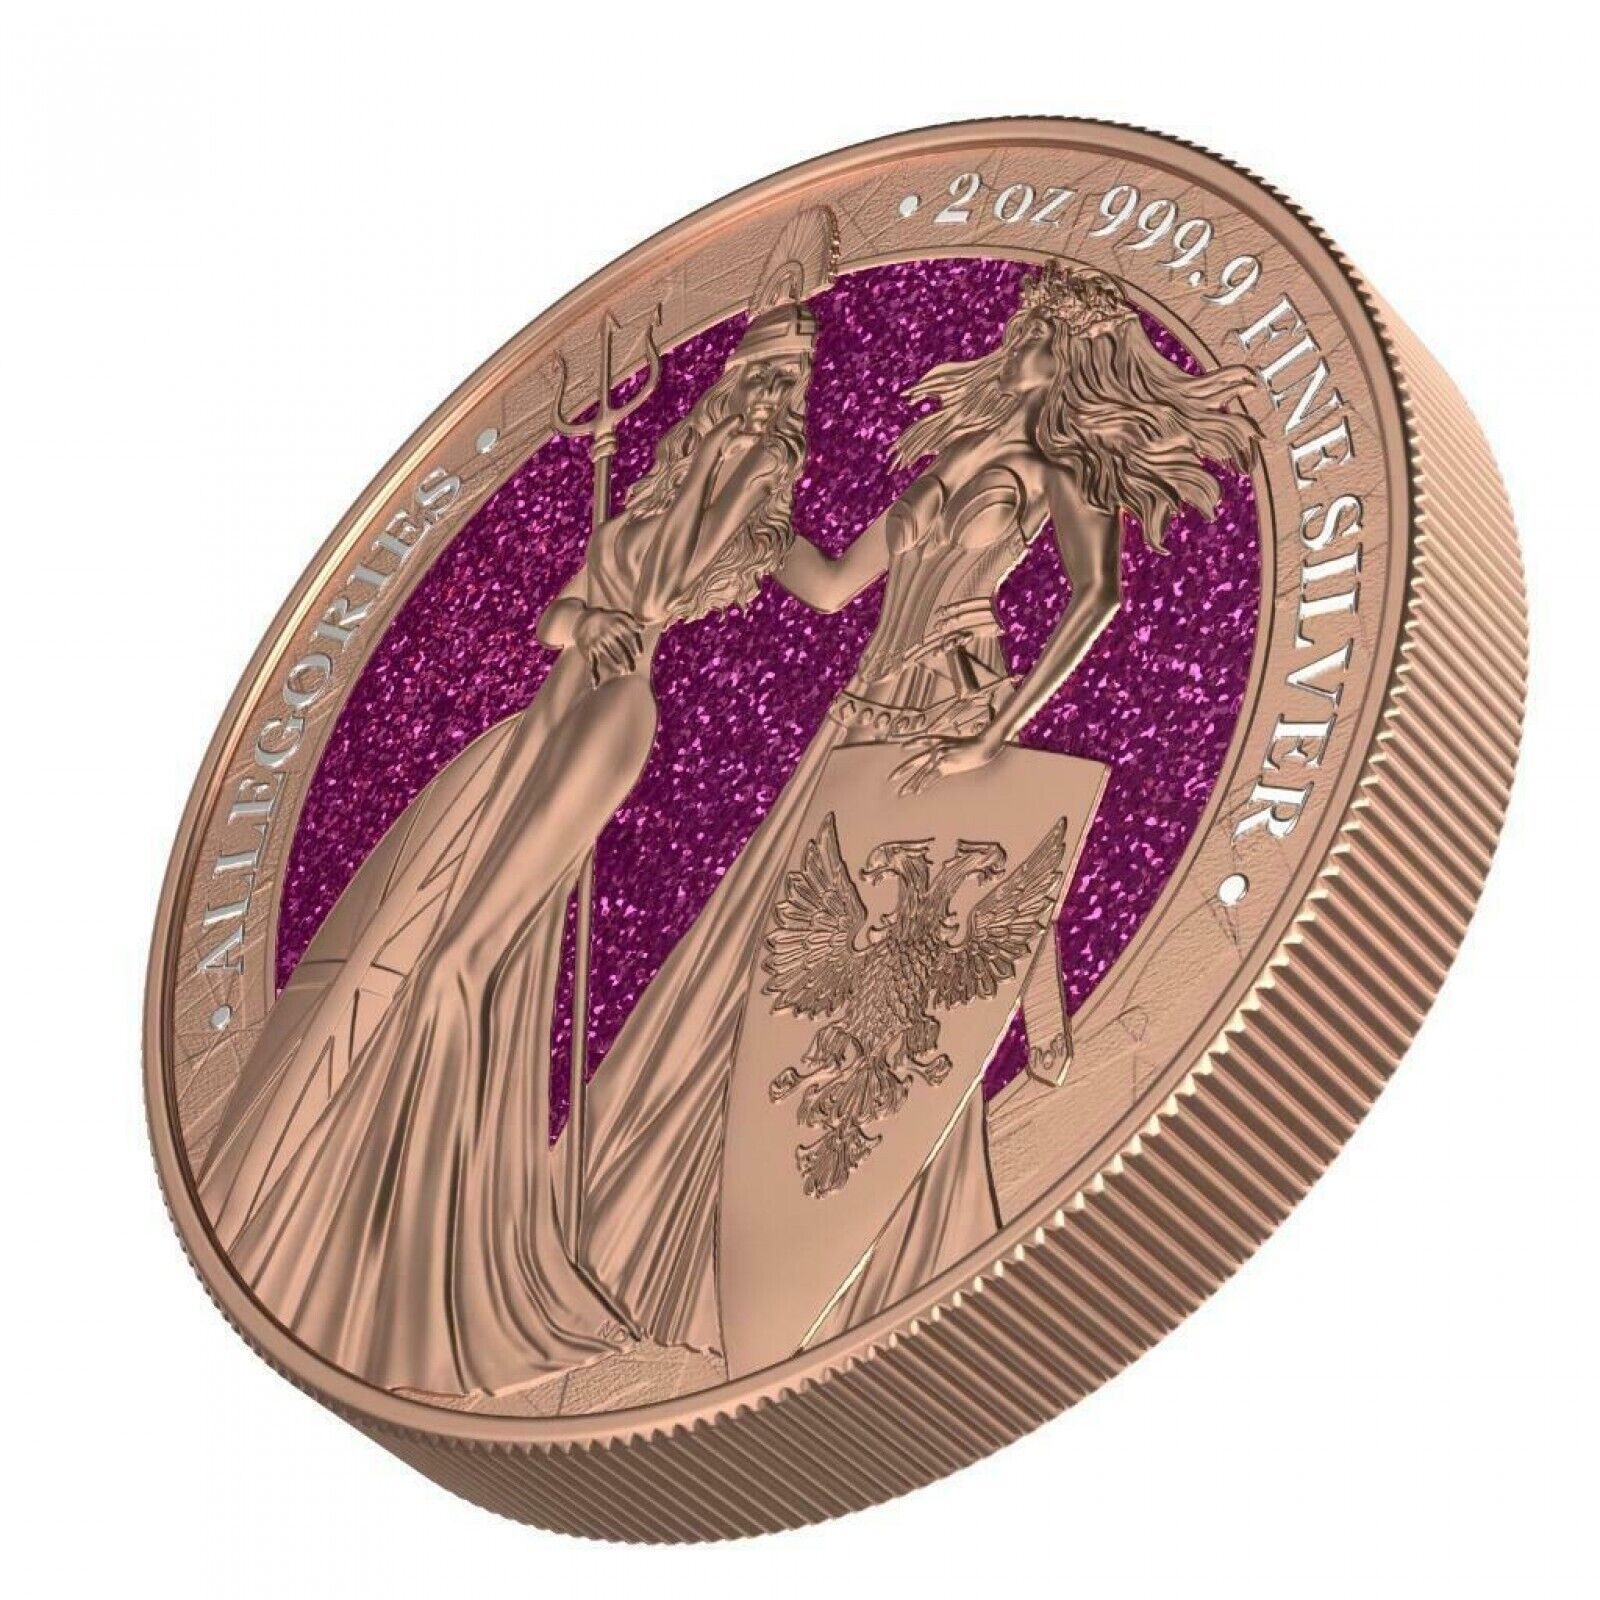 2 Oz Silver Coin 2019 10 Mark Britannia & Germania- Gilded Pink Diamond Dust